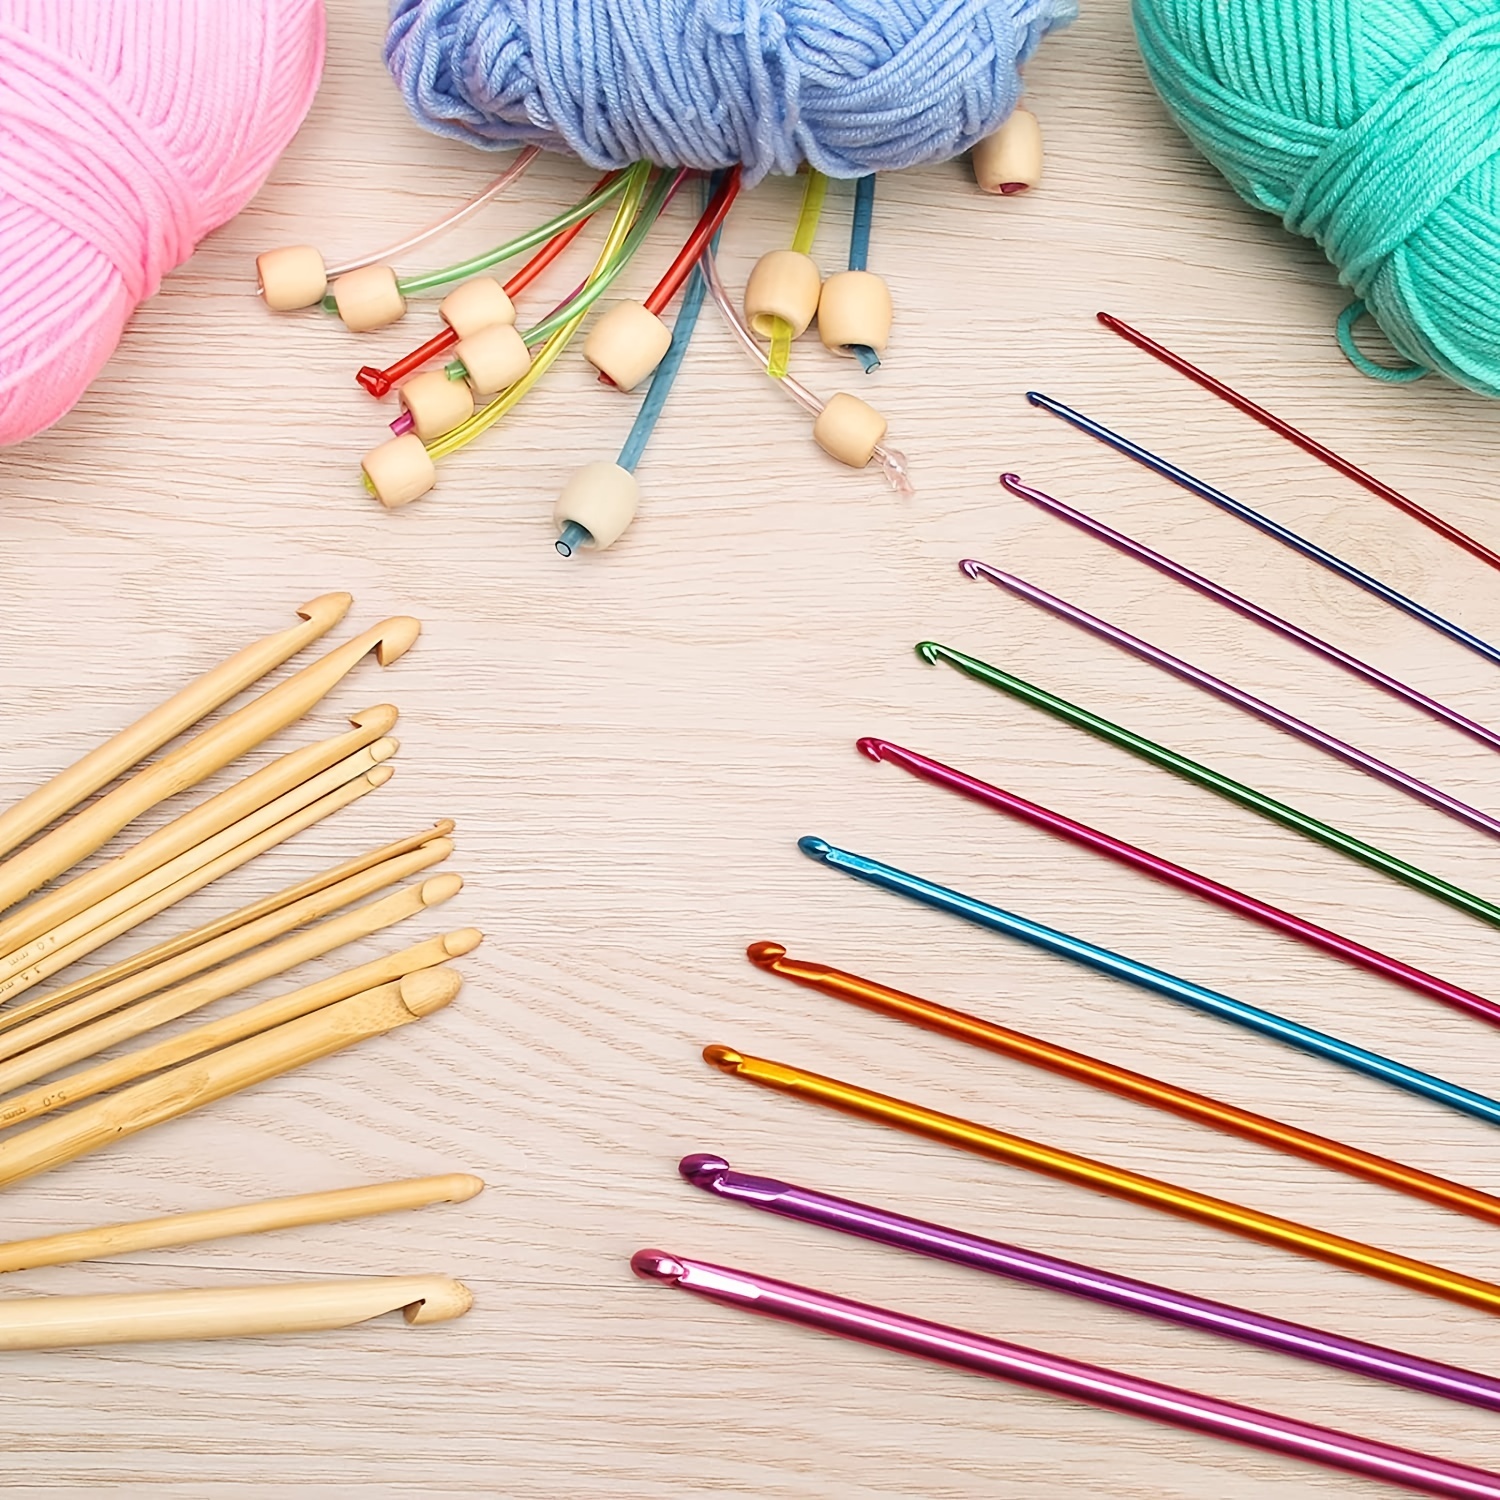 12pcs Colourful Plastic TUNISIAN AFGHAN Crochet Hook Knit Needles Set  3.5-12mm